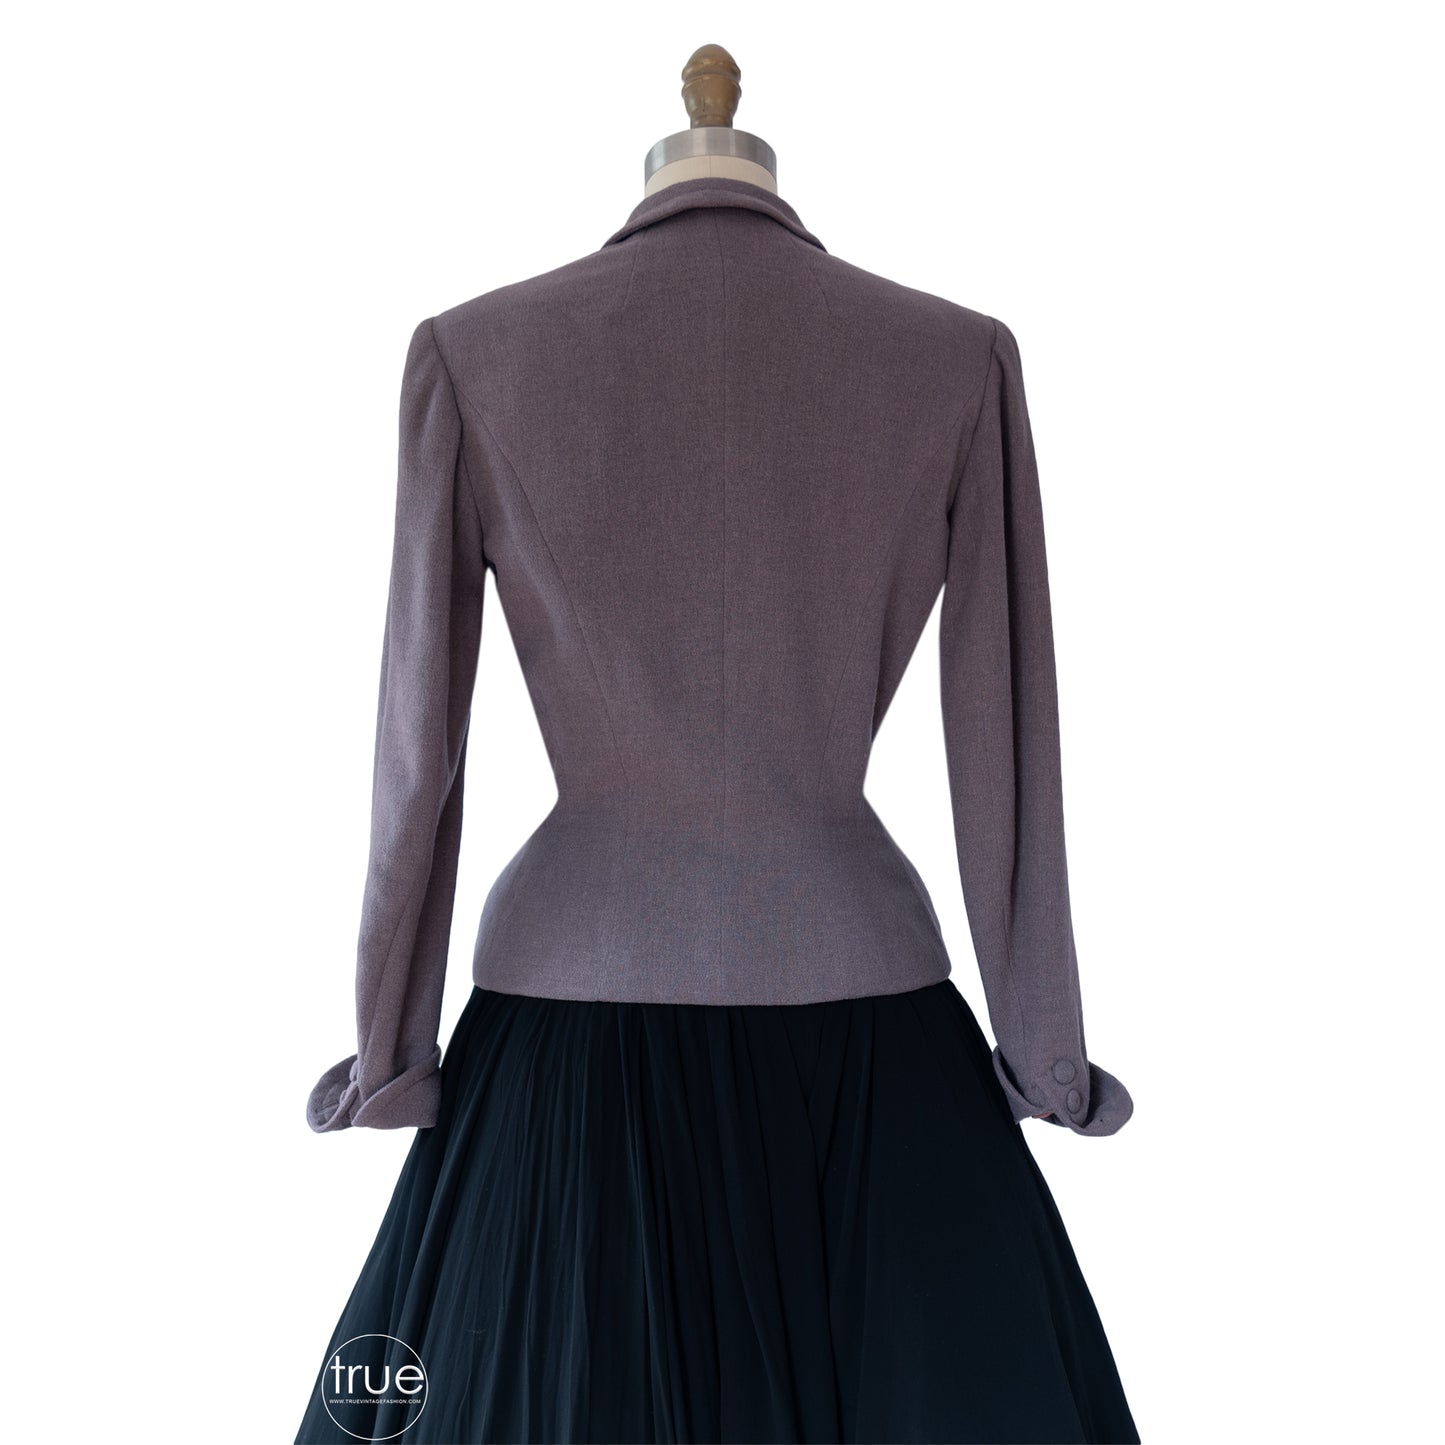 vintage 1940's jacket ...classic "new look" Charlotte Green lavender jacket blazer